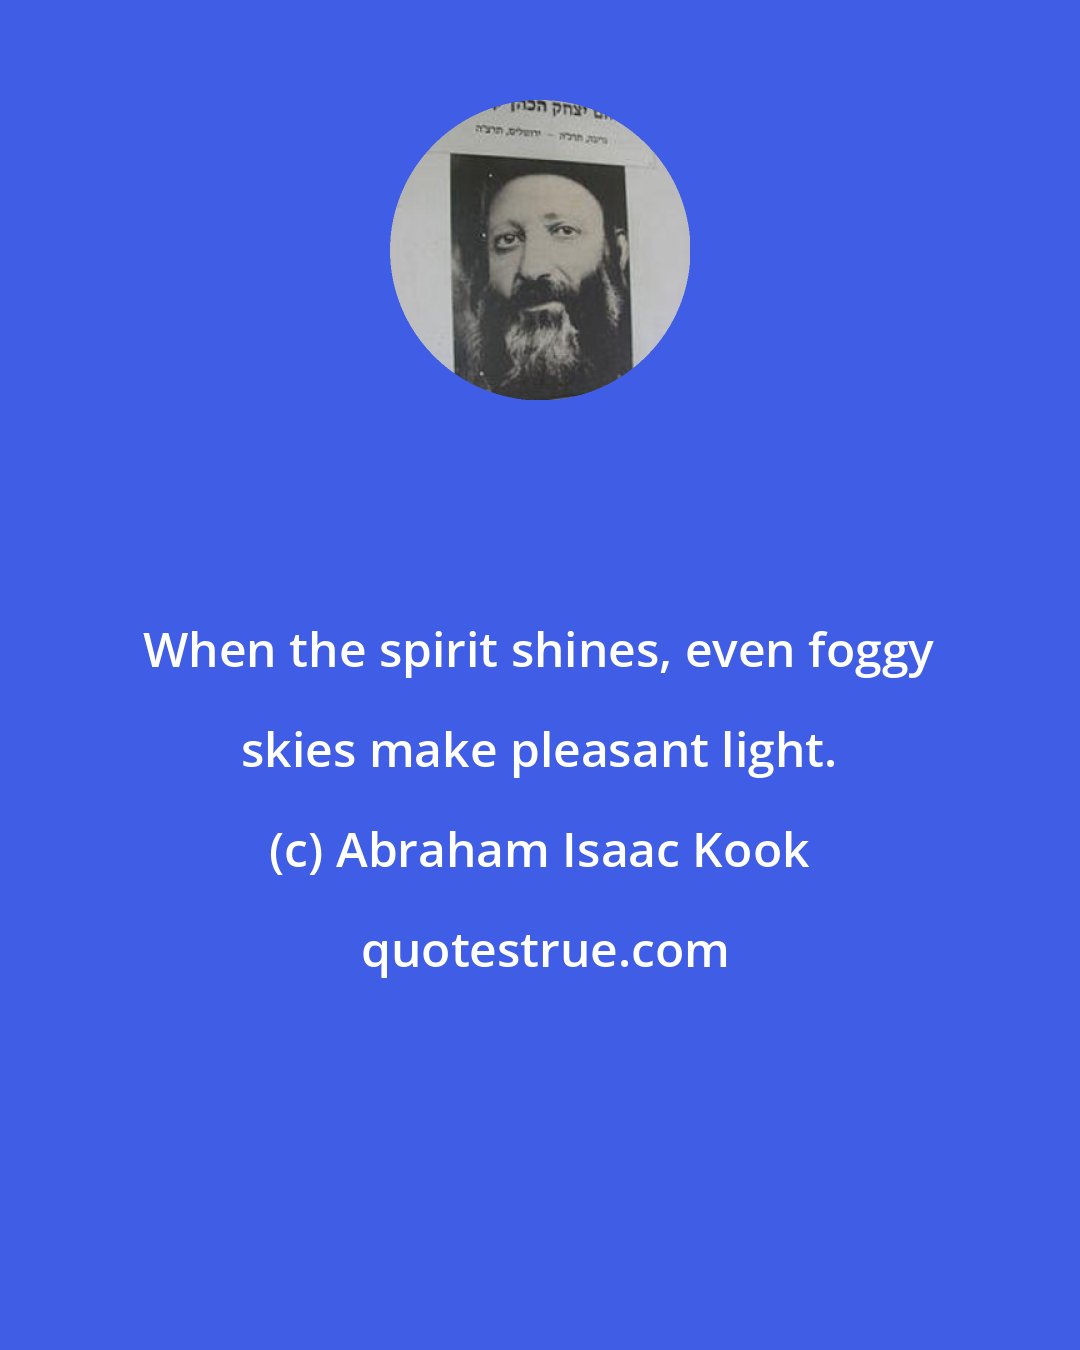 Abraham Isaac Kook: When the spirit shines, even foggy skies make pleasant light.